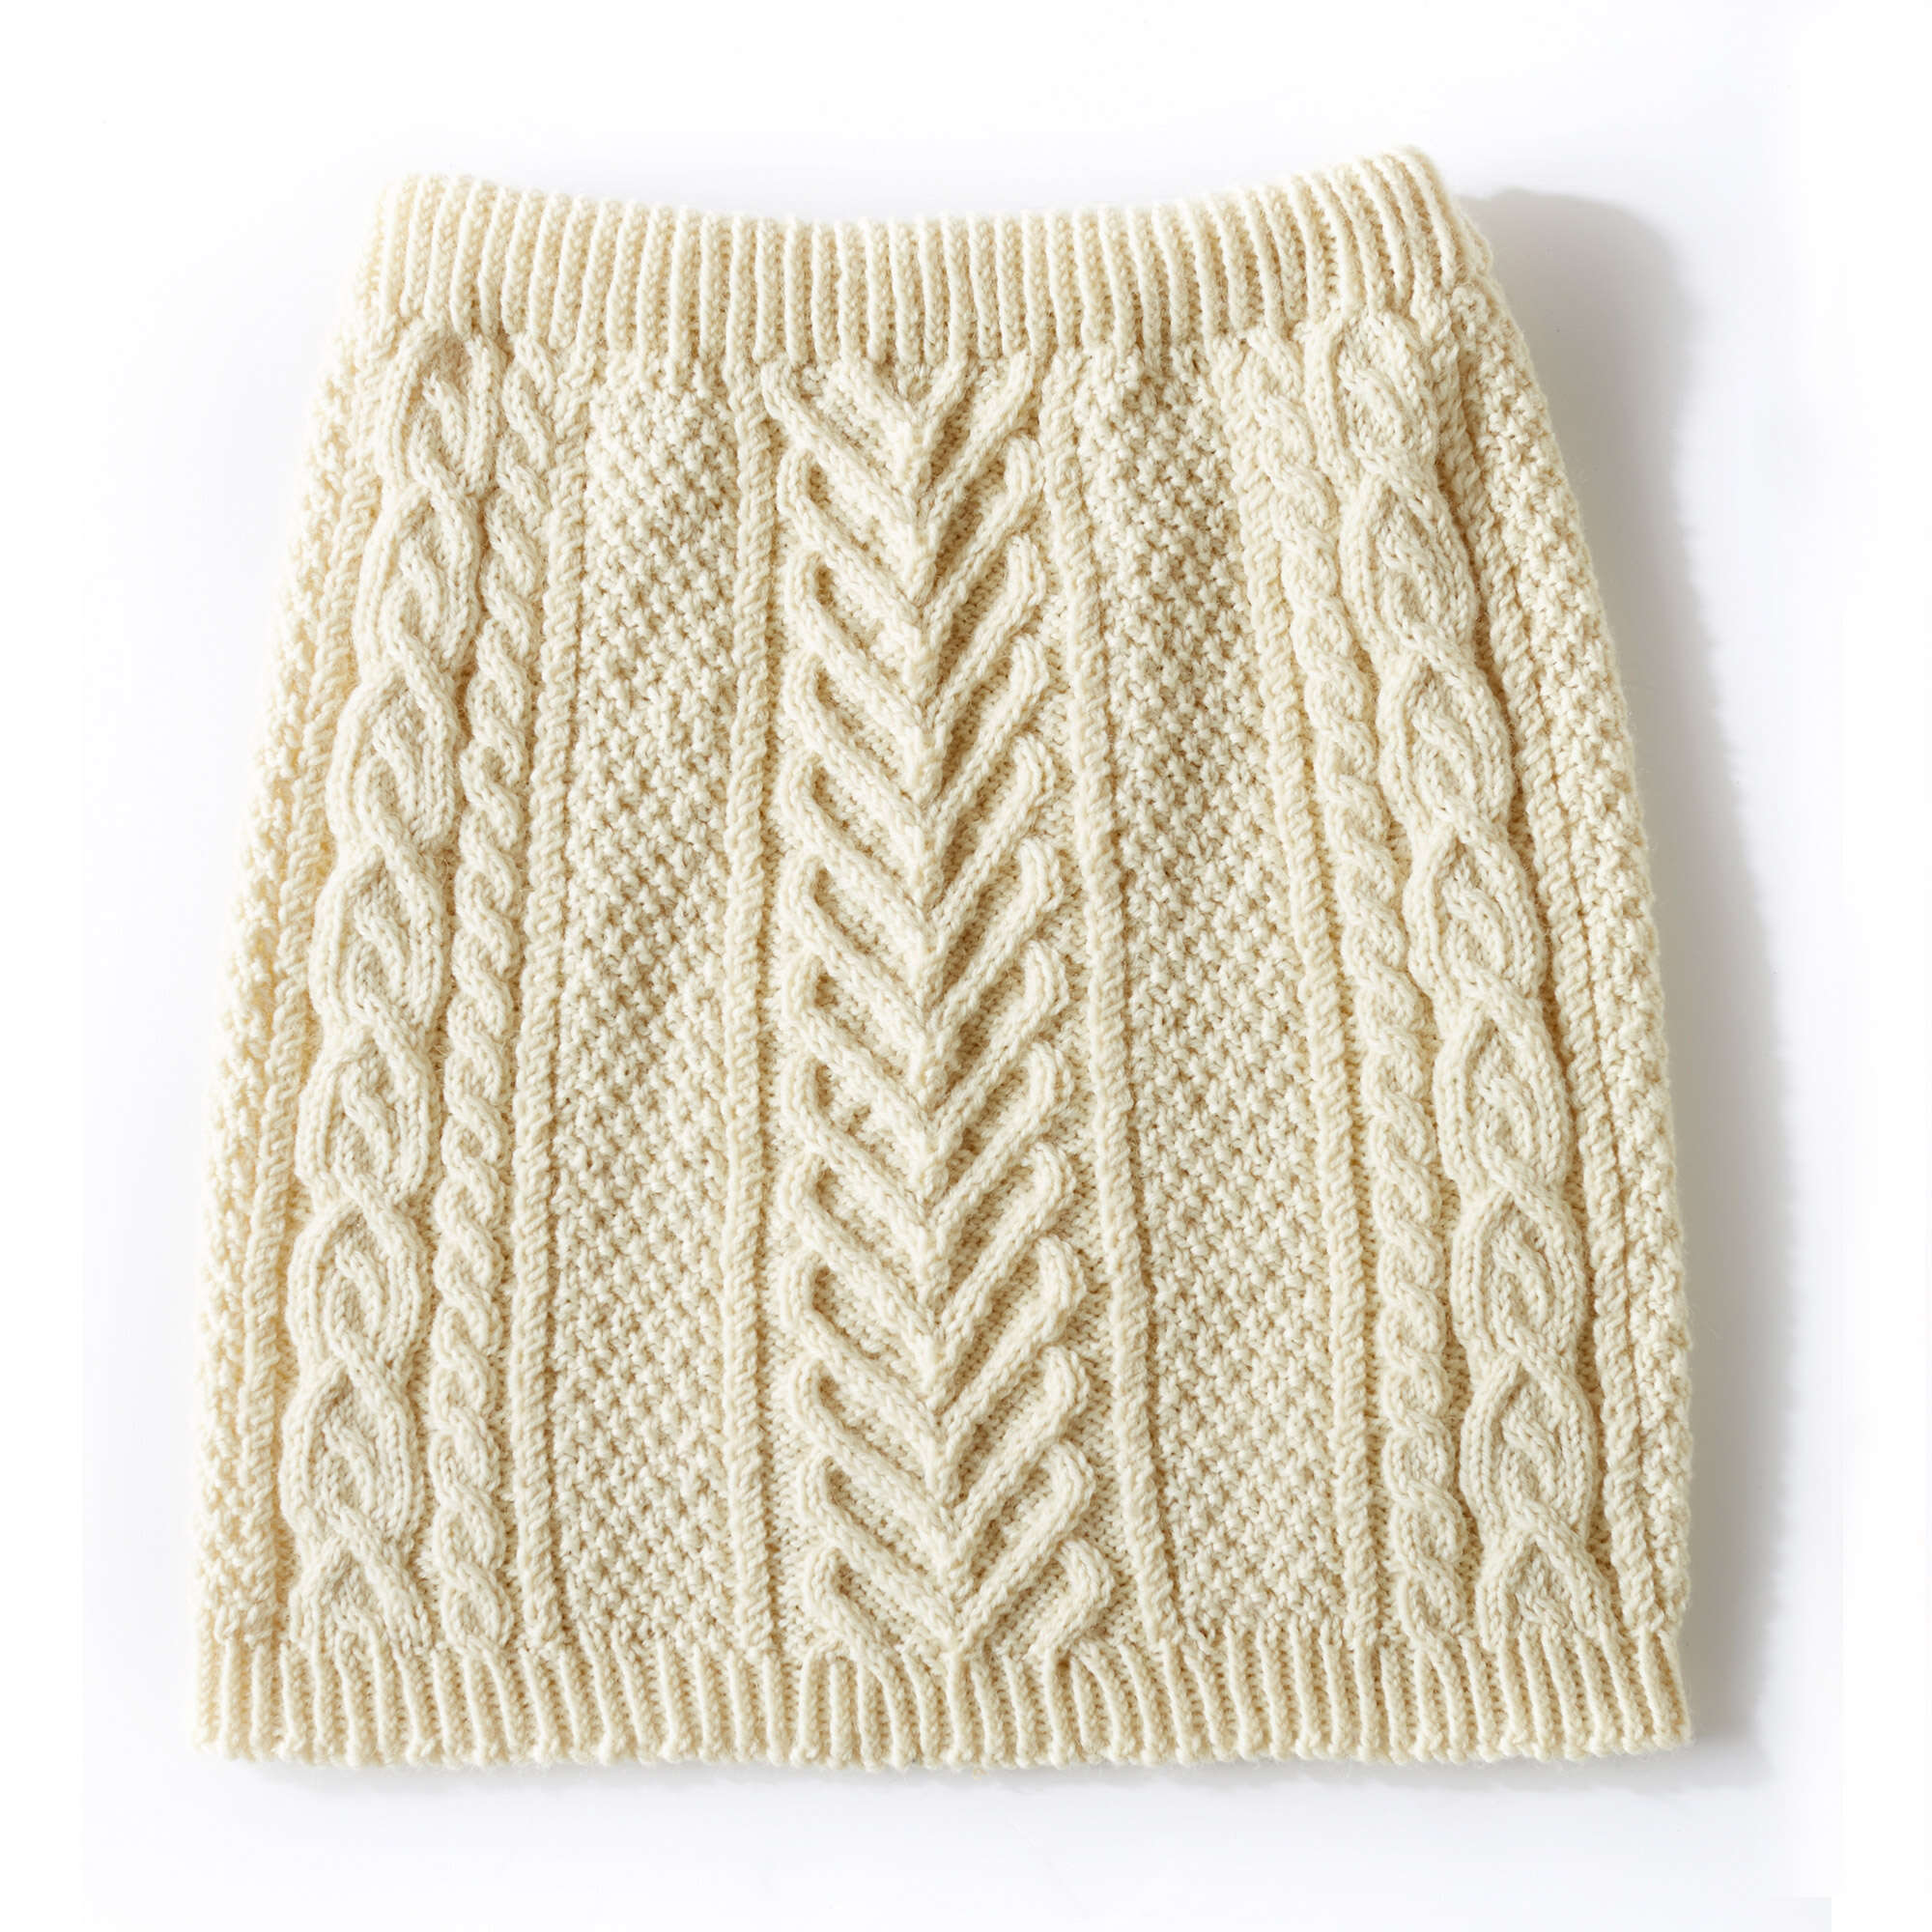 How to Knit a Skirt Waistband on a Knitting Machine - Beginner